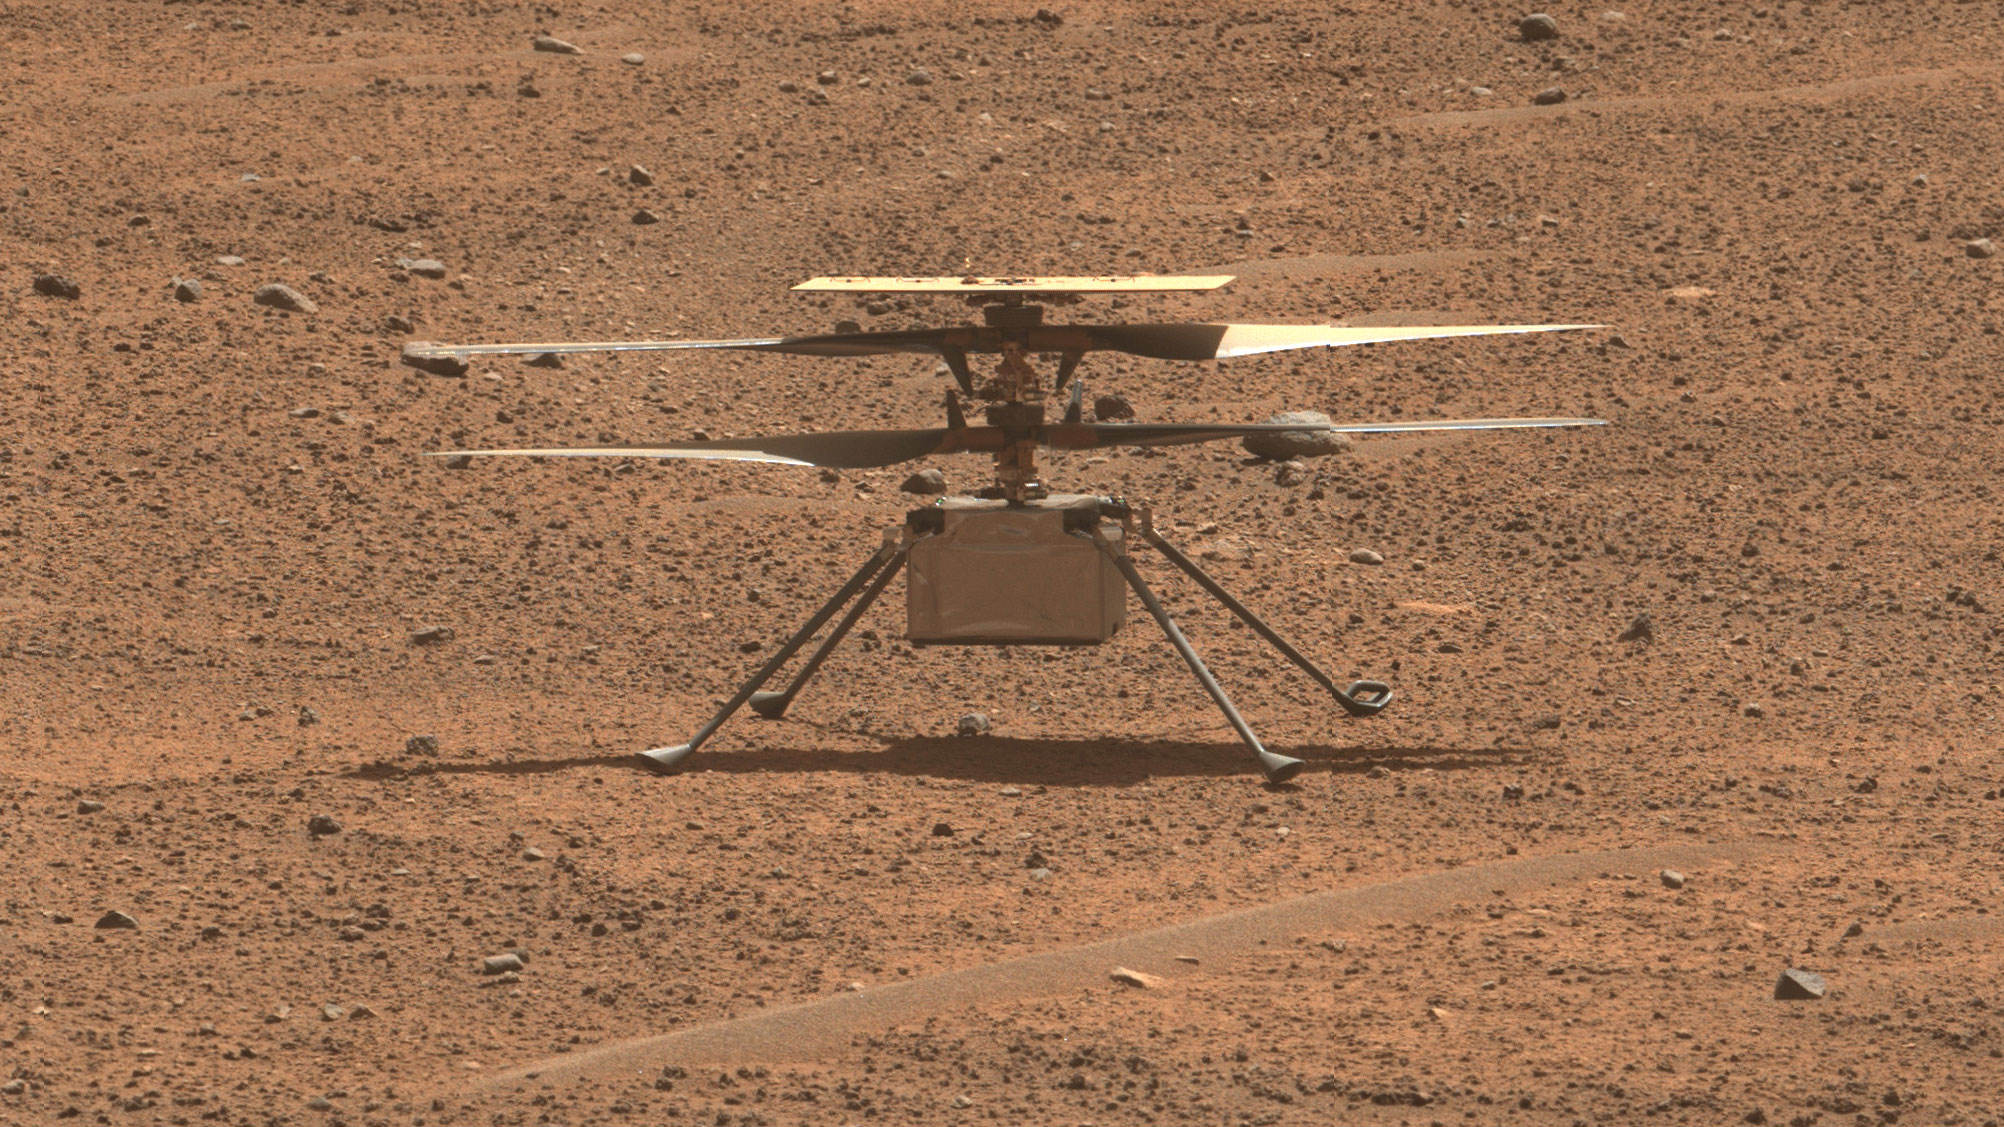 slide 1 - Image of the Mars Ingenuity helicopter